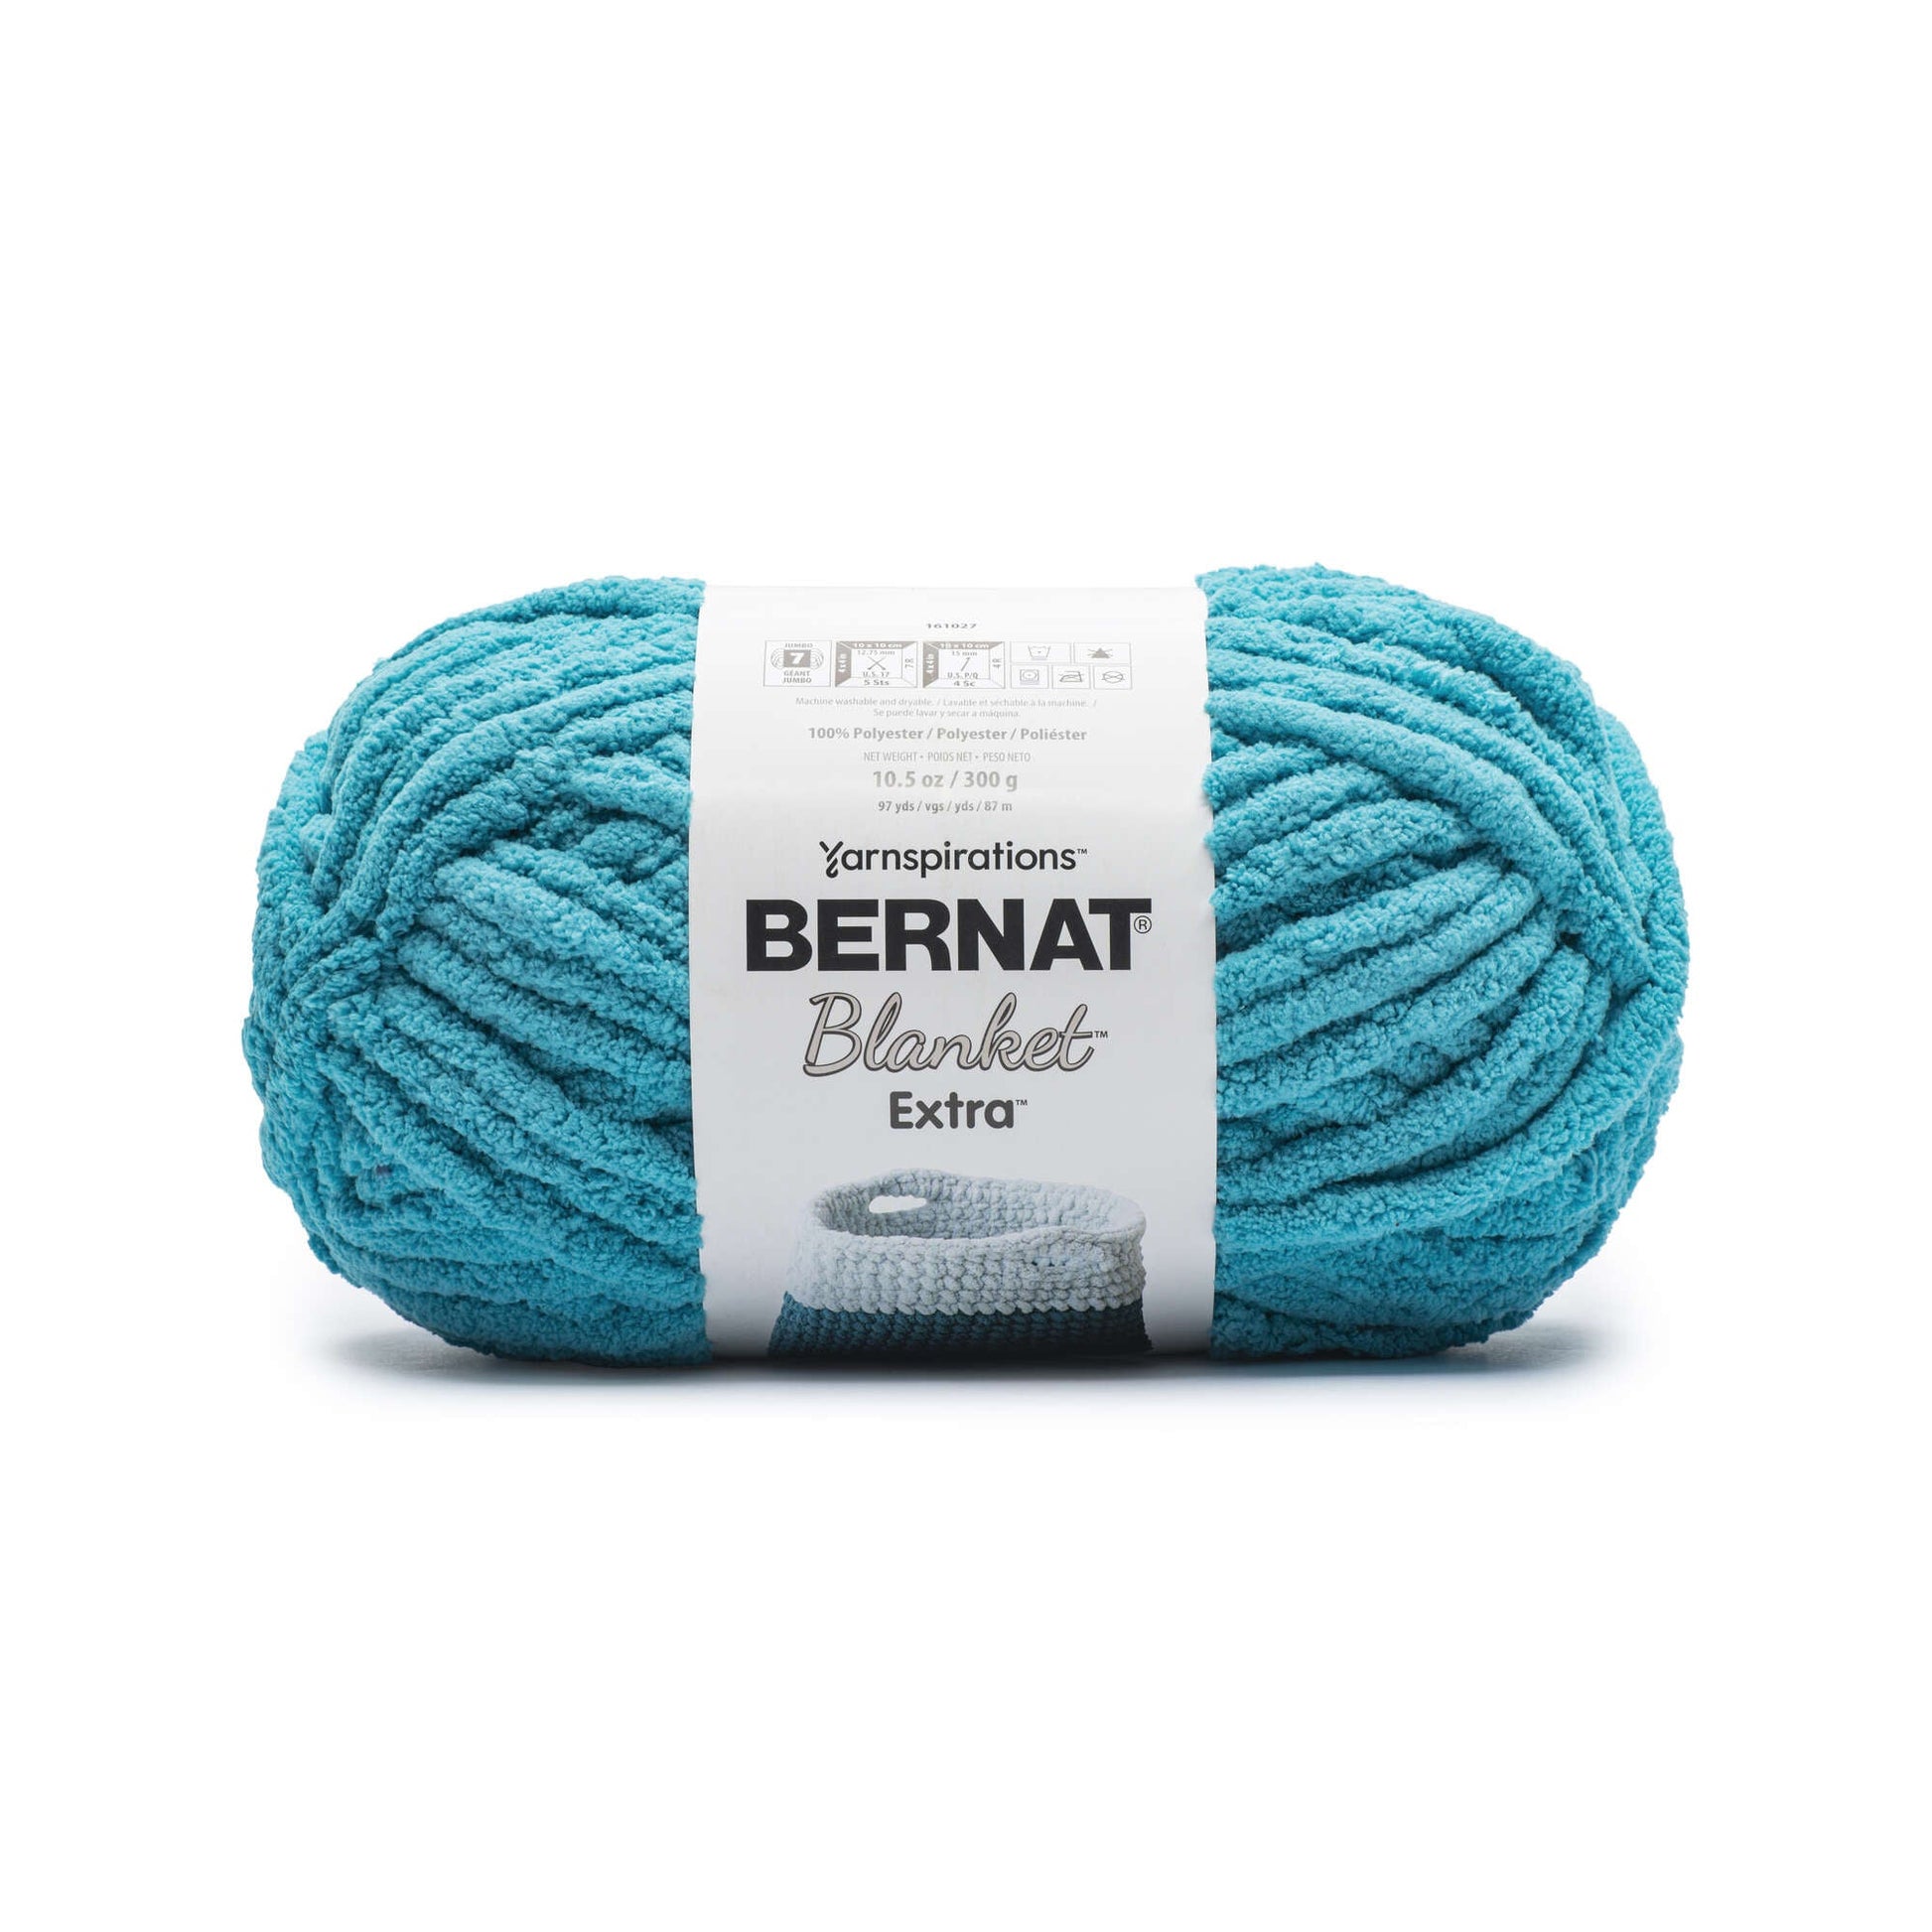 Bernat Blanket Extra Yarn (300g/10.5oz) - Clearance Shades* Bright Blue